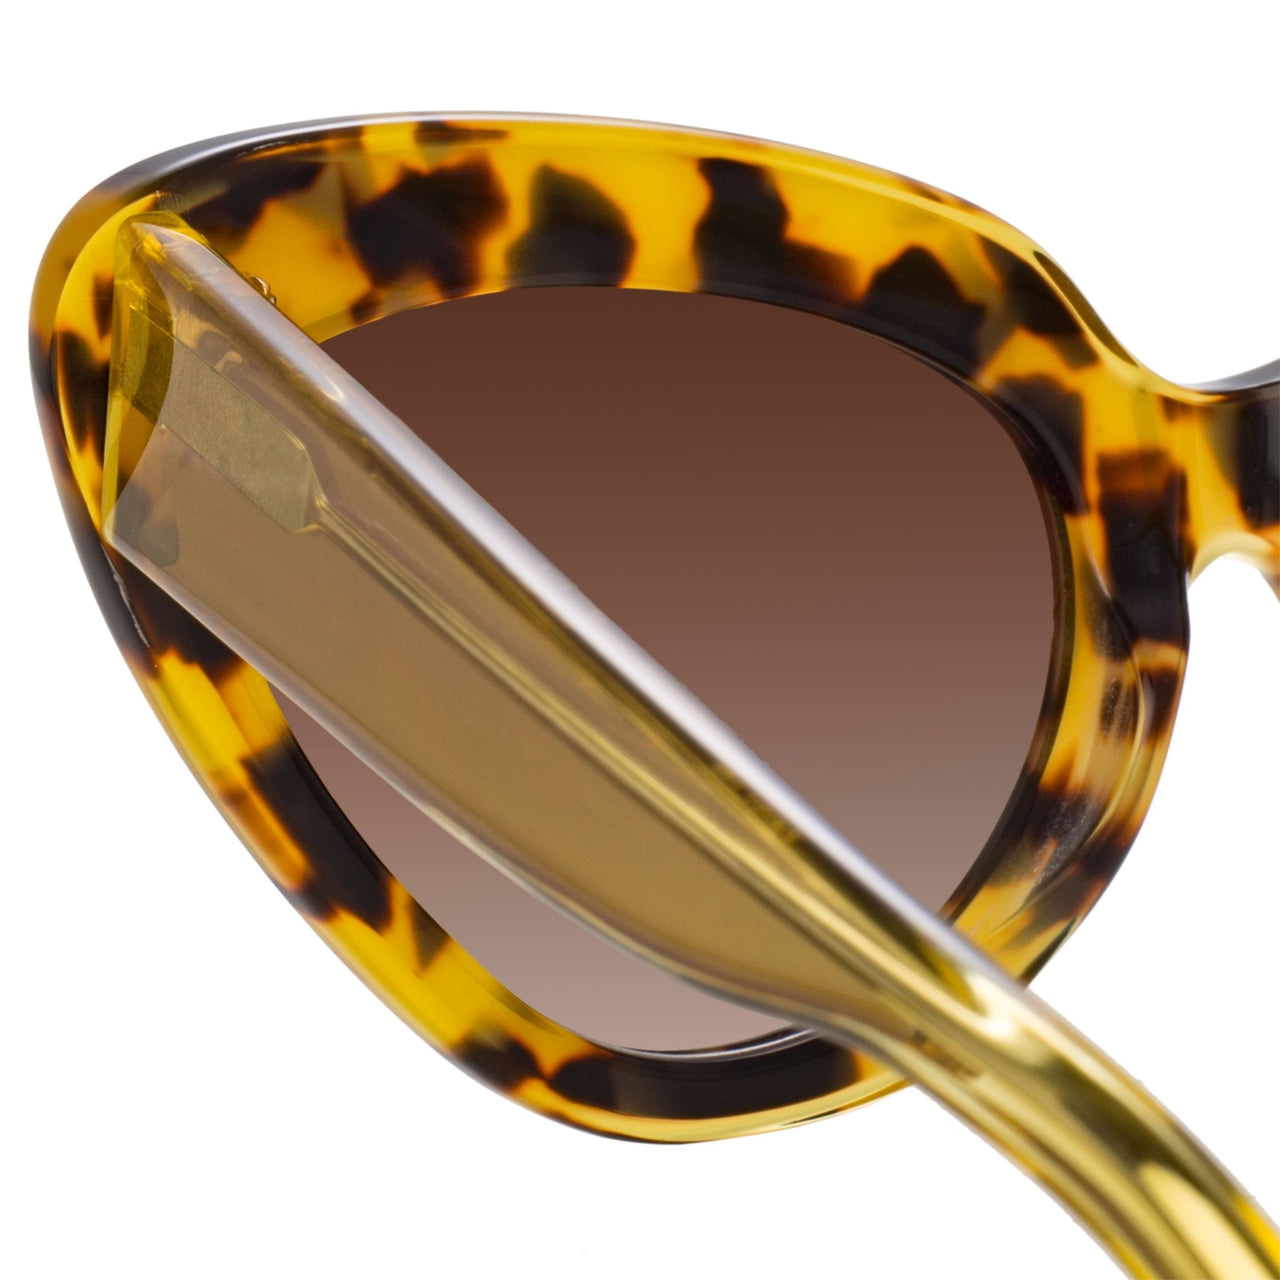 Erdem Women Sunglasses Cat Eye Tortoise Shell Yellow with Brown Graduated Lenses EDM29C2SUN - Watches & Crystals